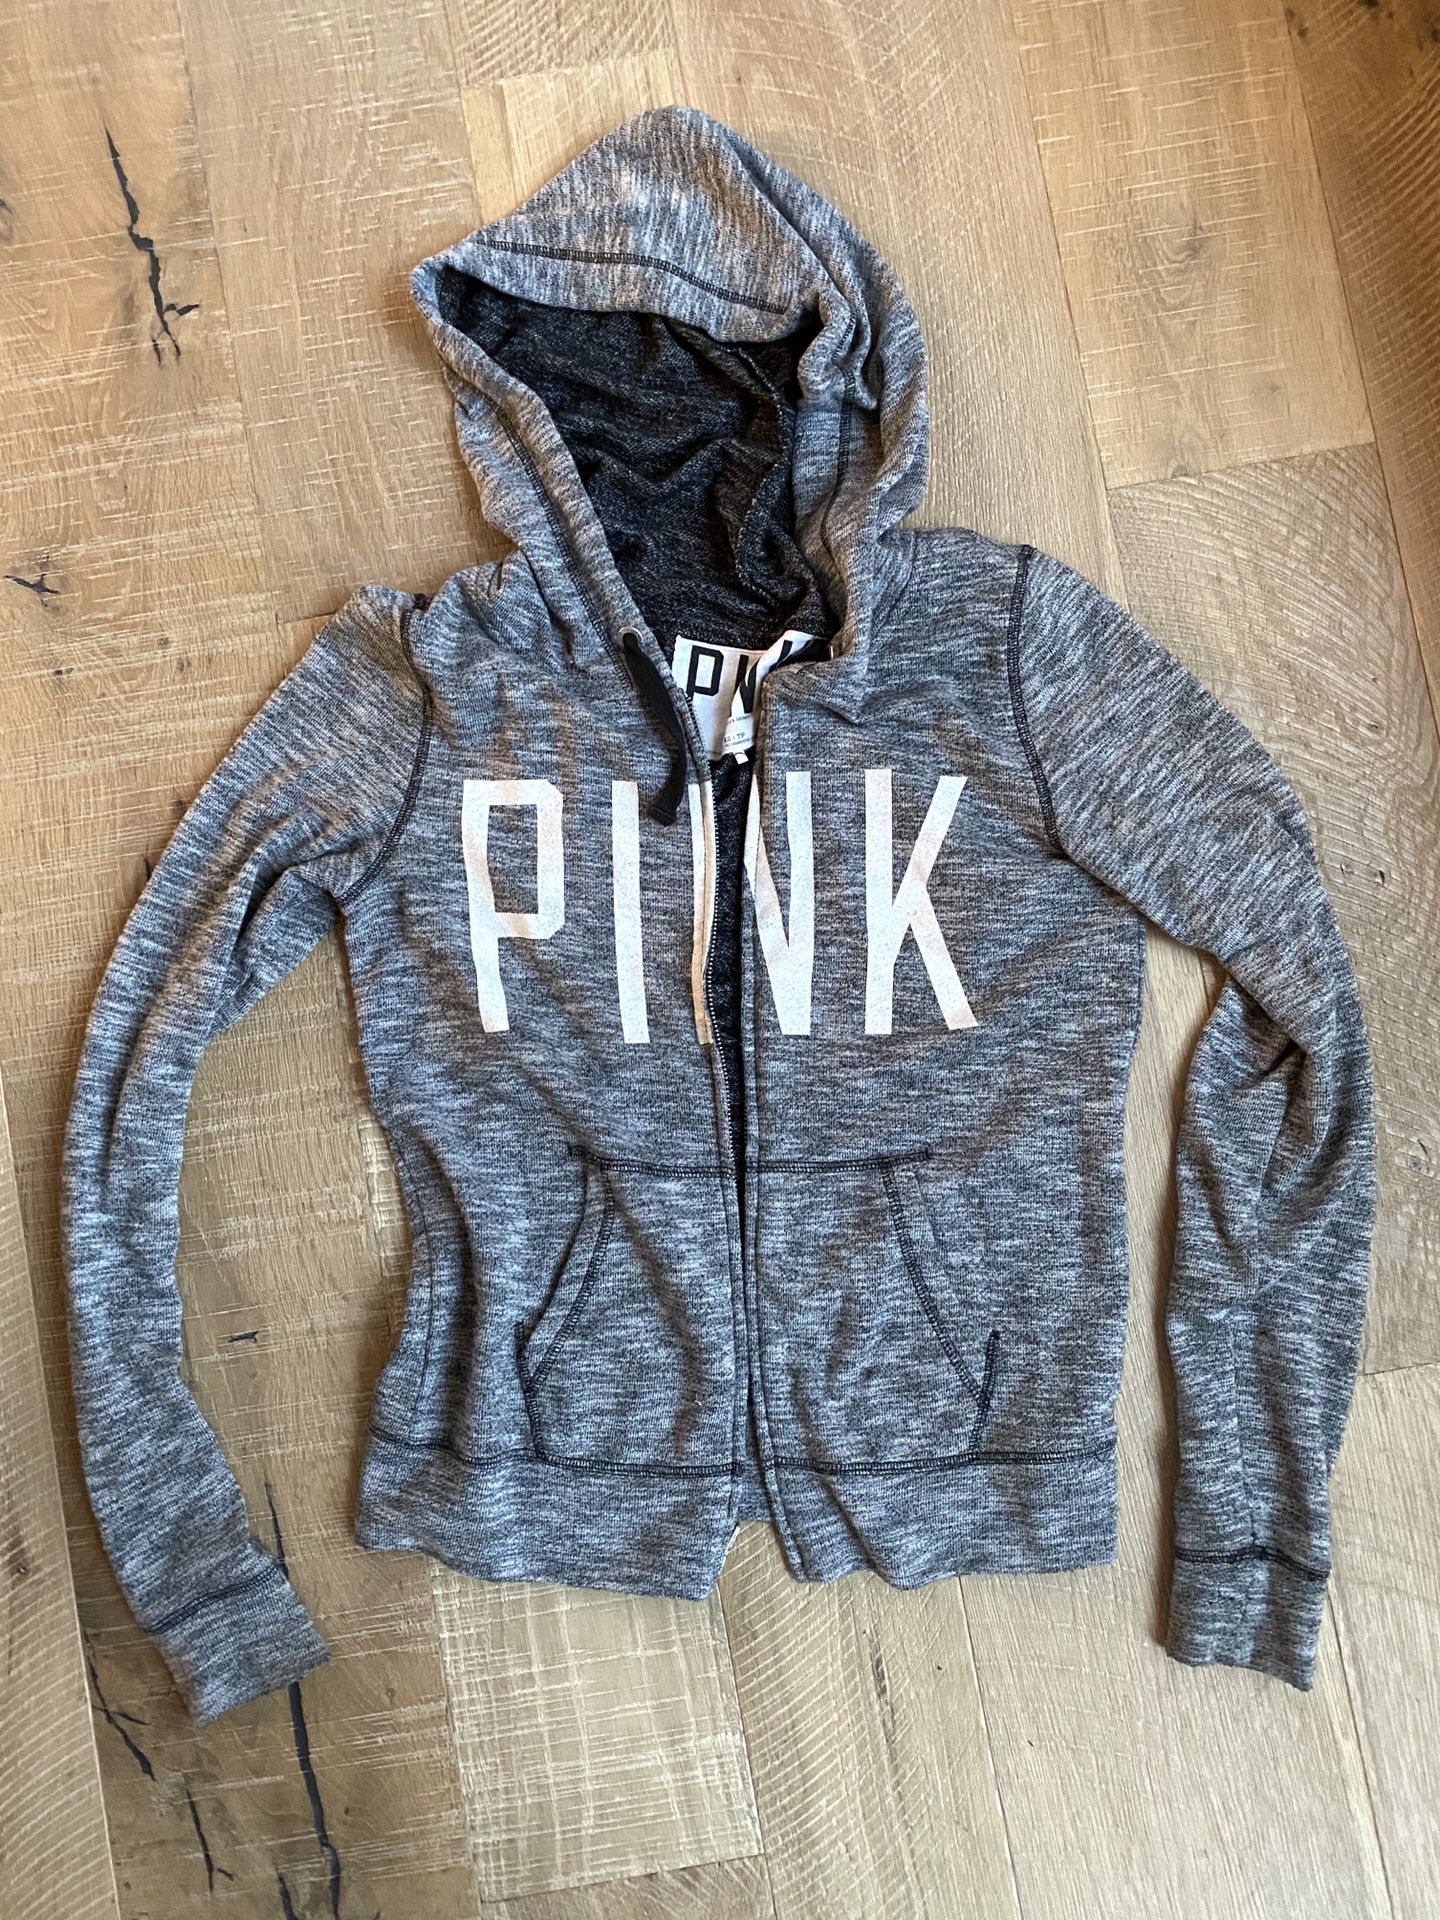 Victoria Secret/ PINK hoodie jacket!